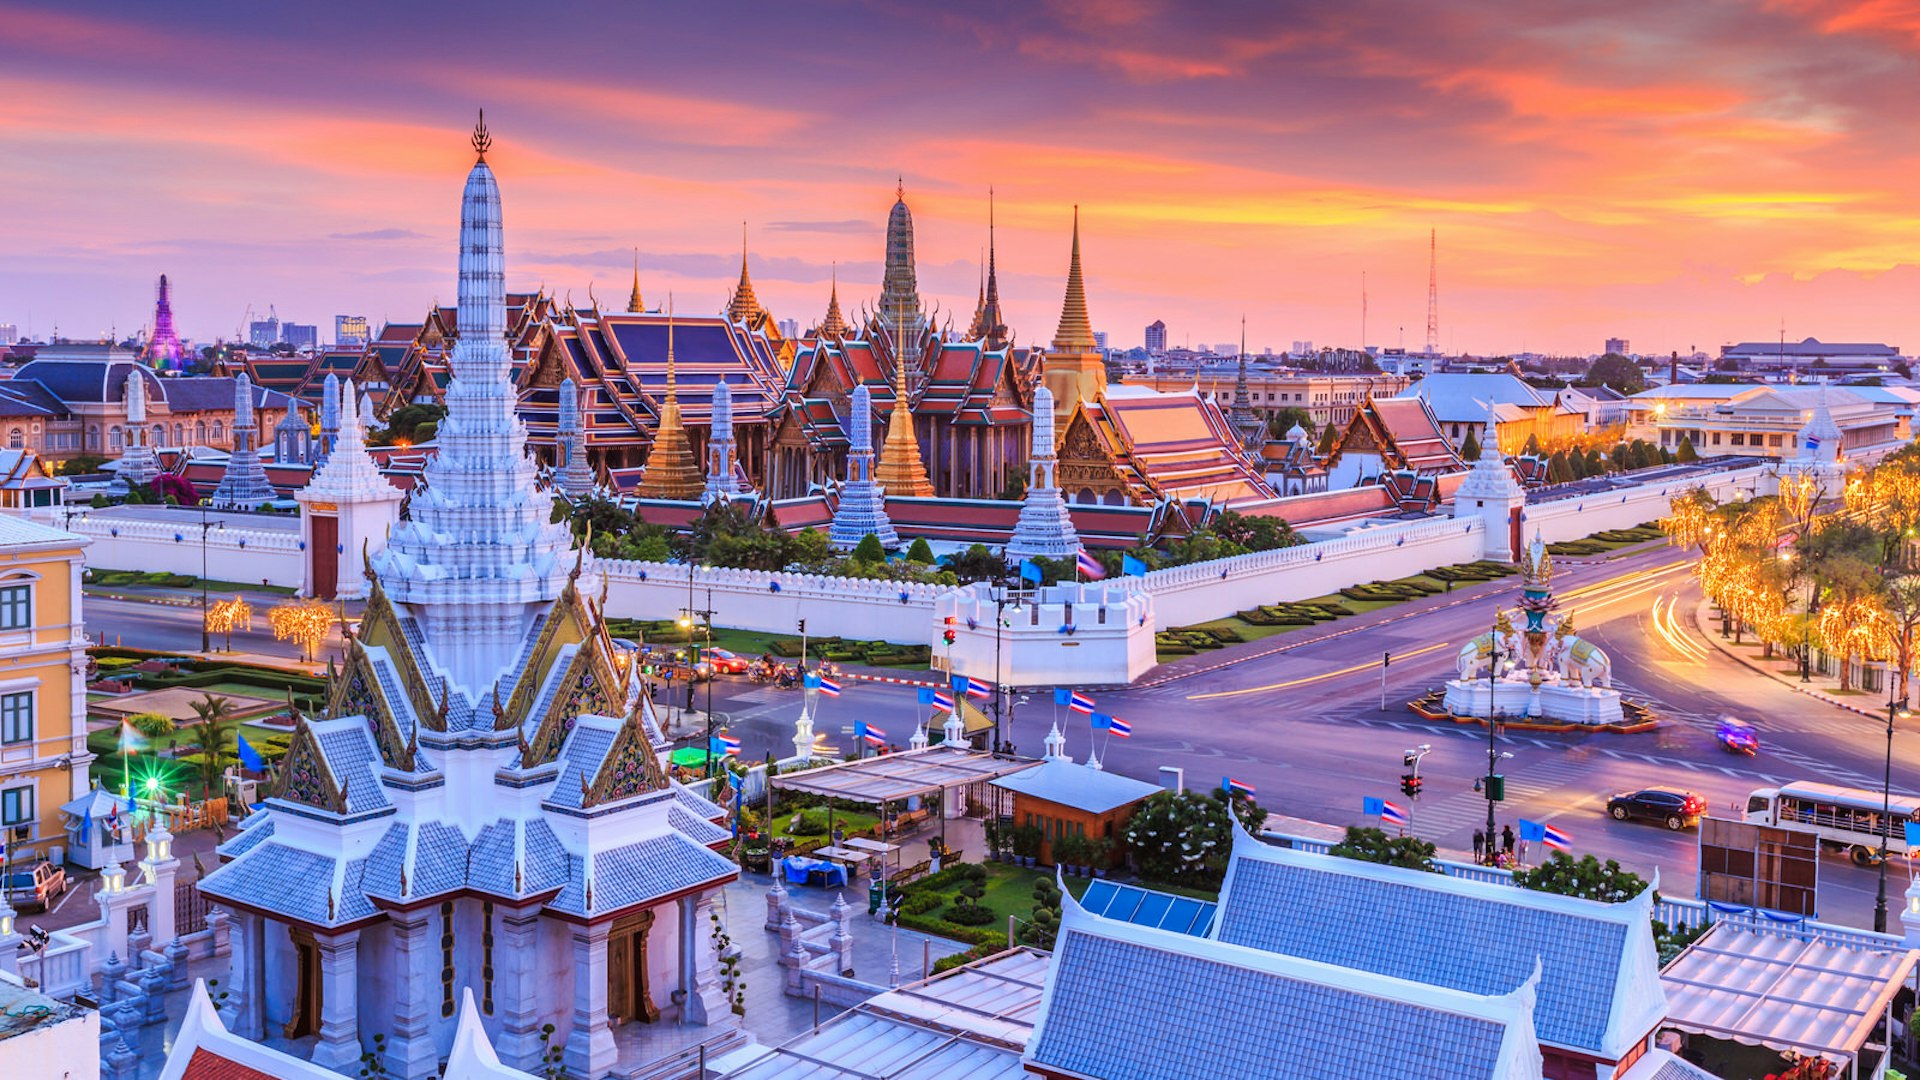 The sun sets over Wat Phra Kaew (Wat Phra Si Rattana Satsadaram or Temple of the Emerald Buddha) and the Grand Palace